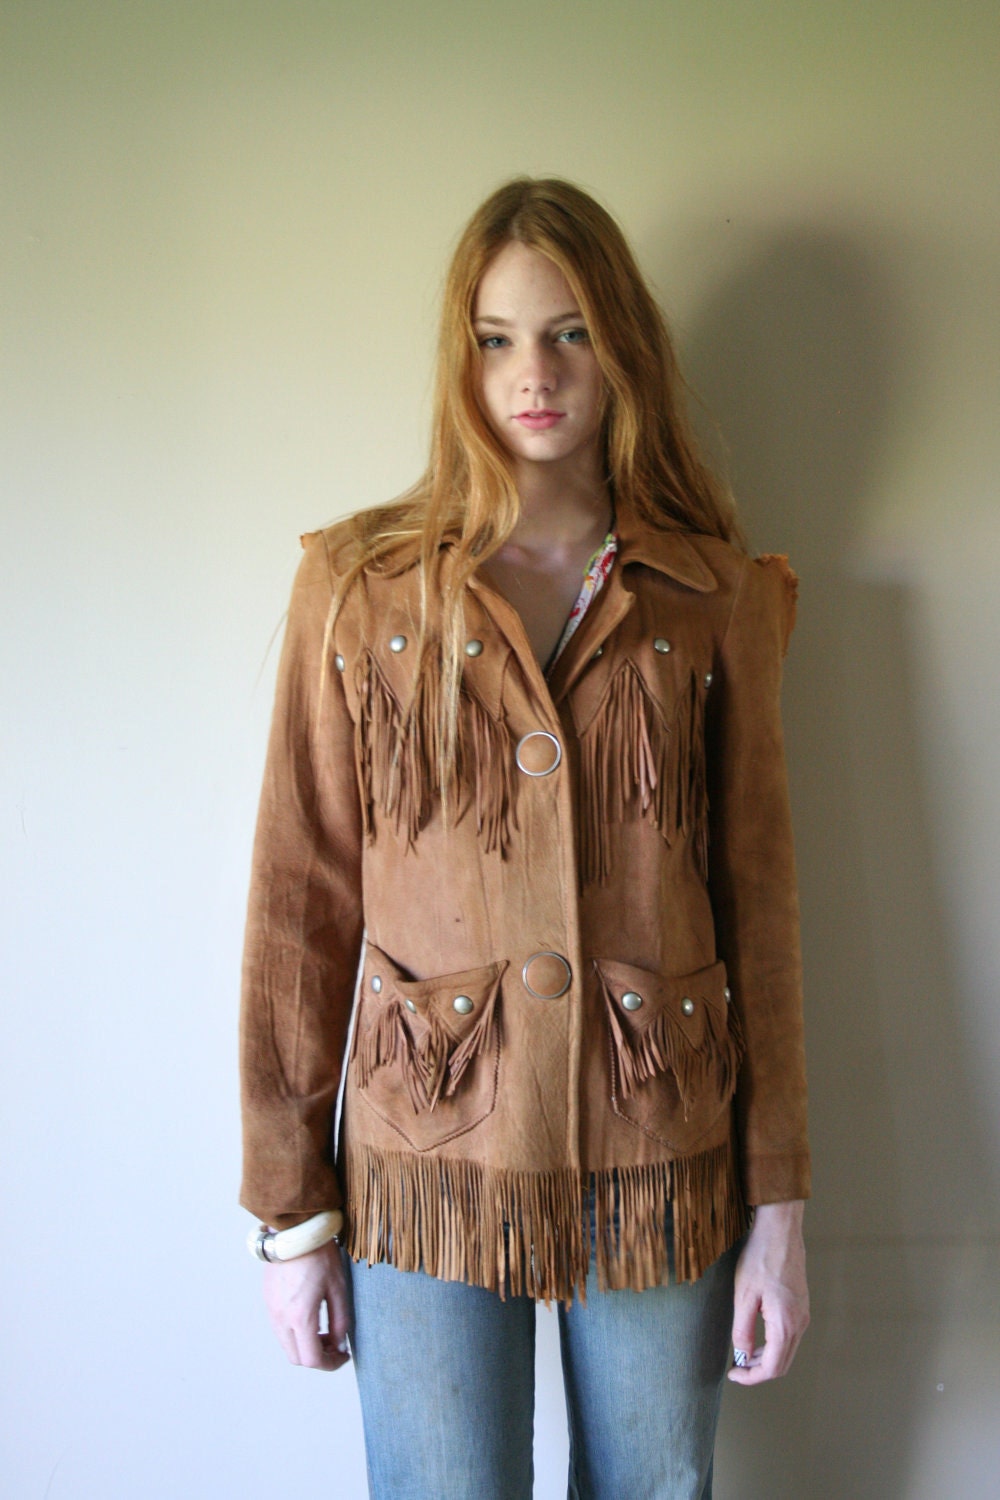 60s Deer Skin Suede Leather Jacket with Fringe by closetcaseVNTG